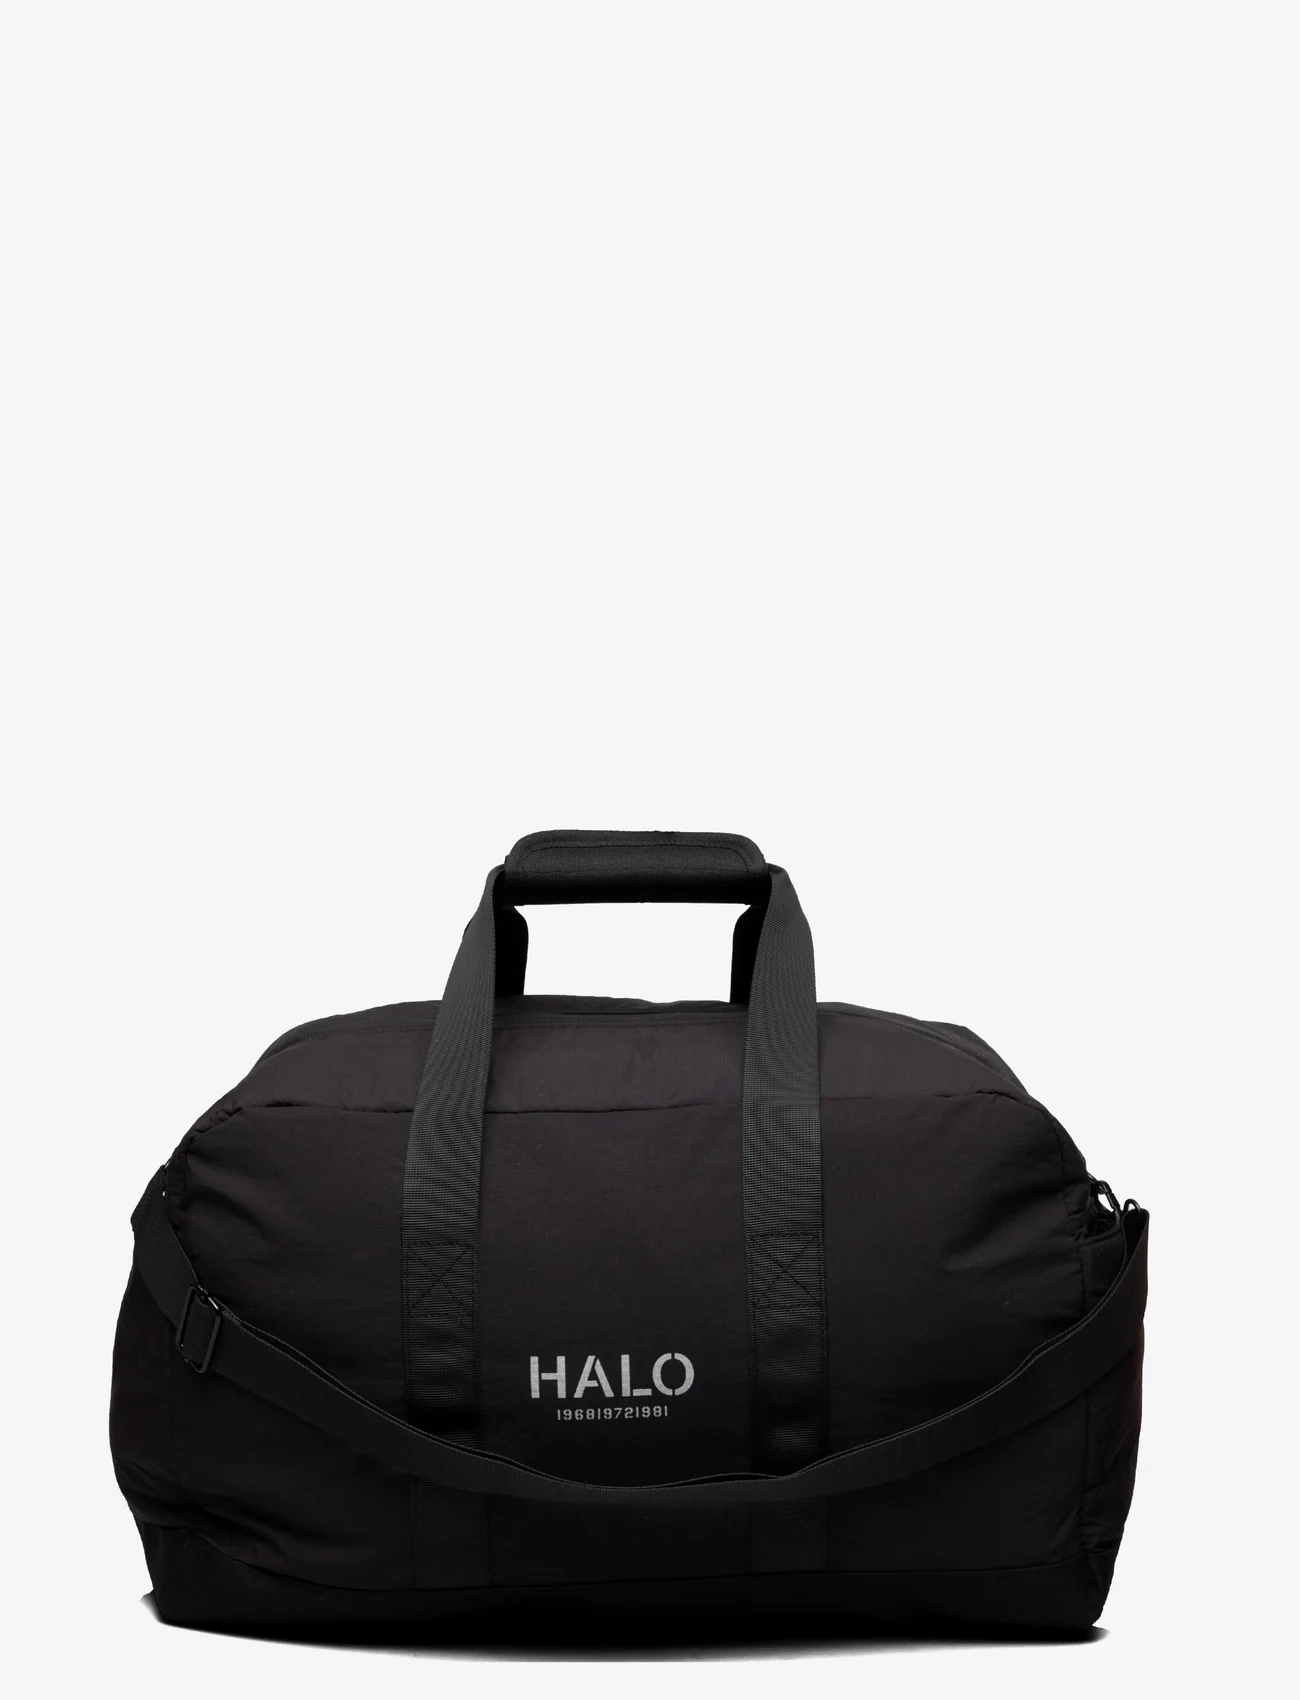 HALO - HALO RIBSTOP DUFFLE BAG - trainingstaschen - black - 0